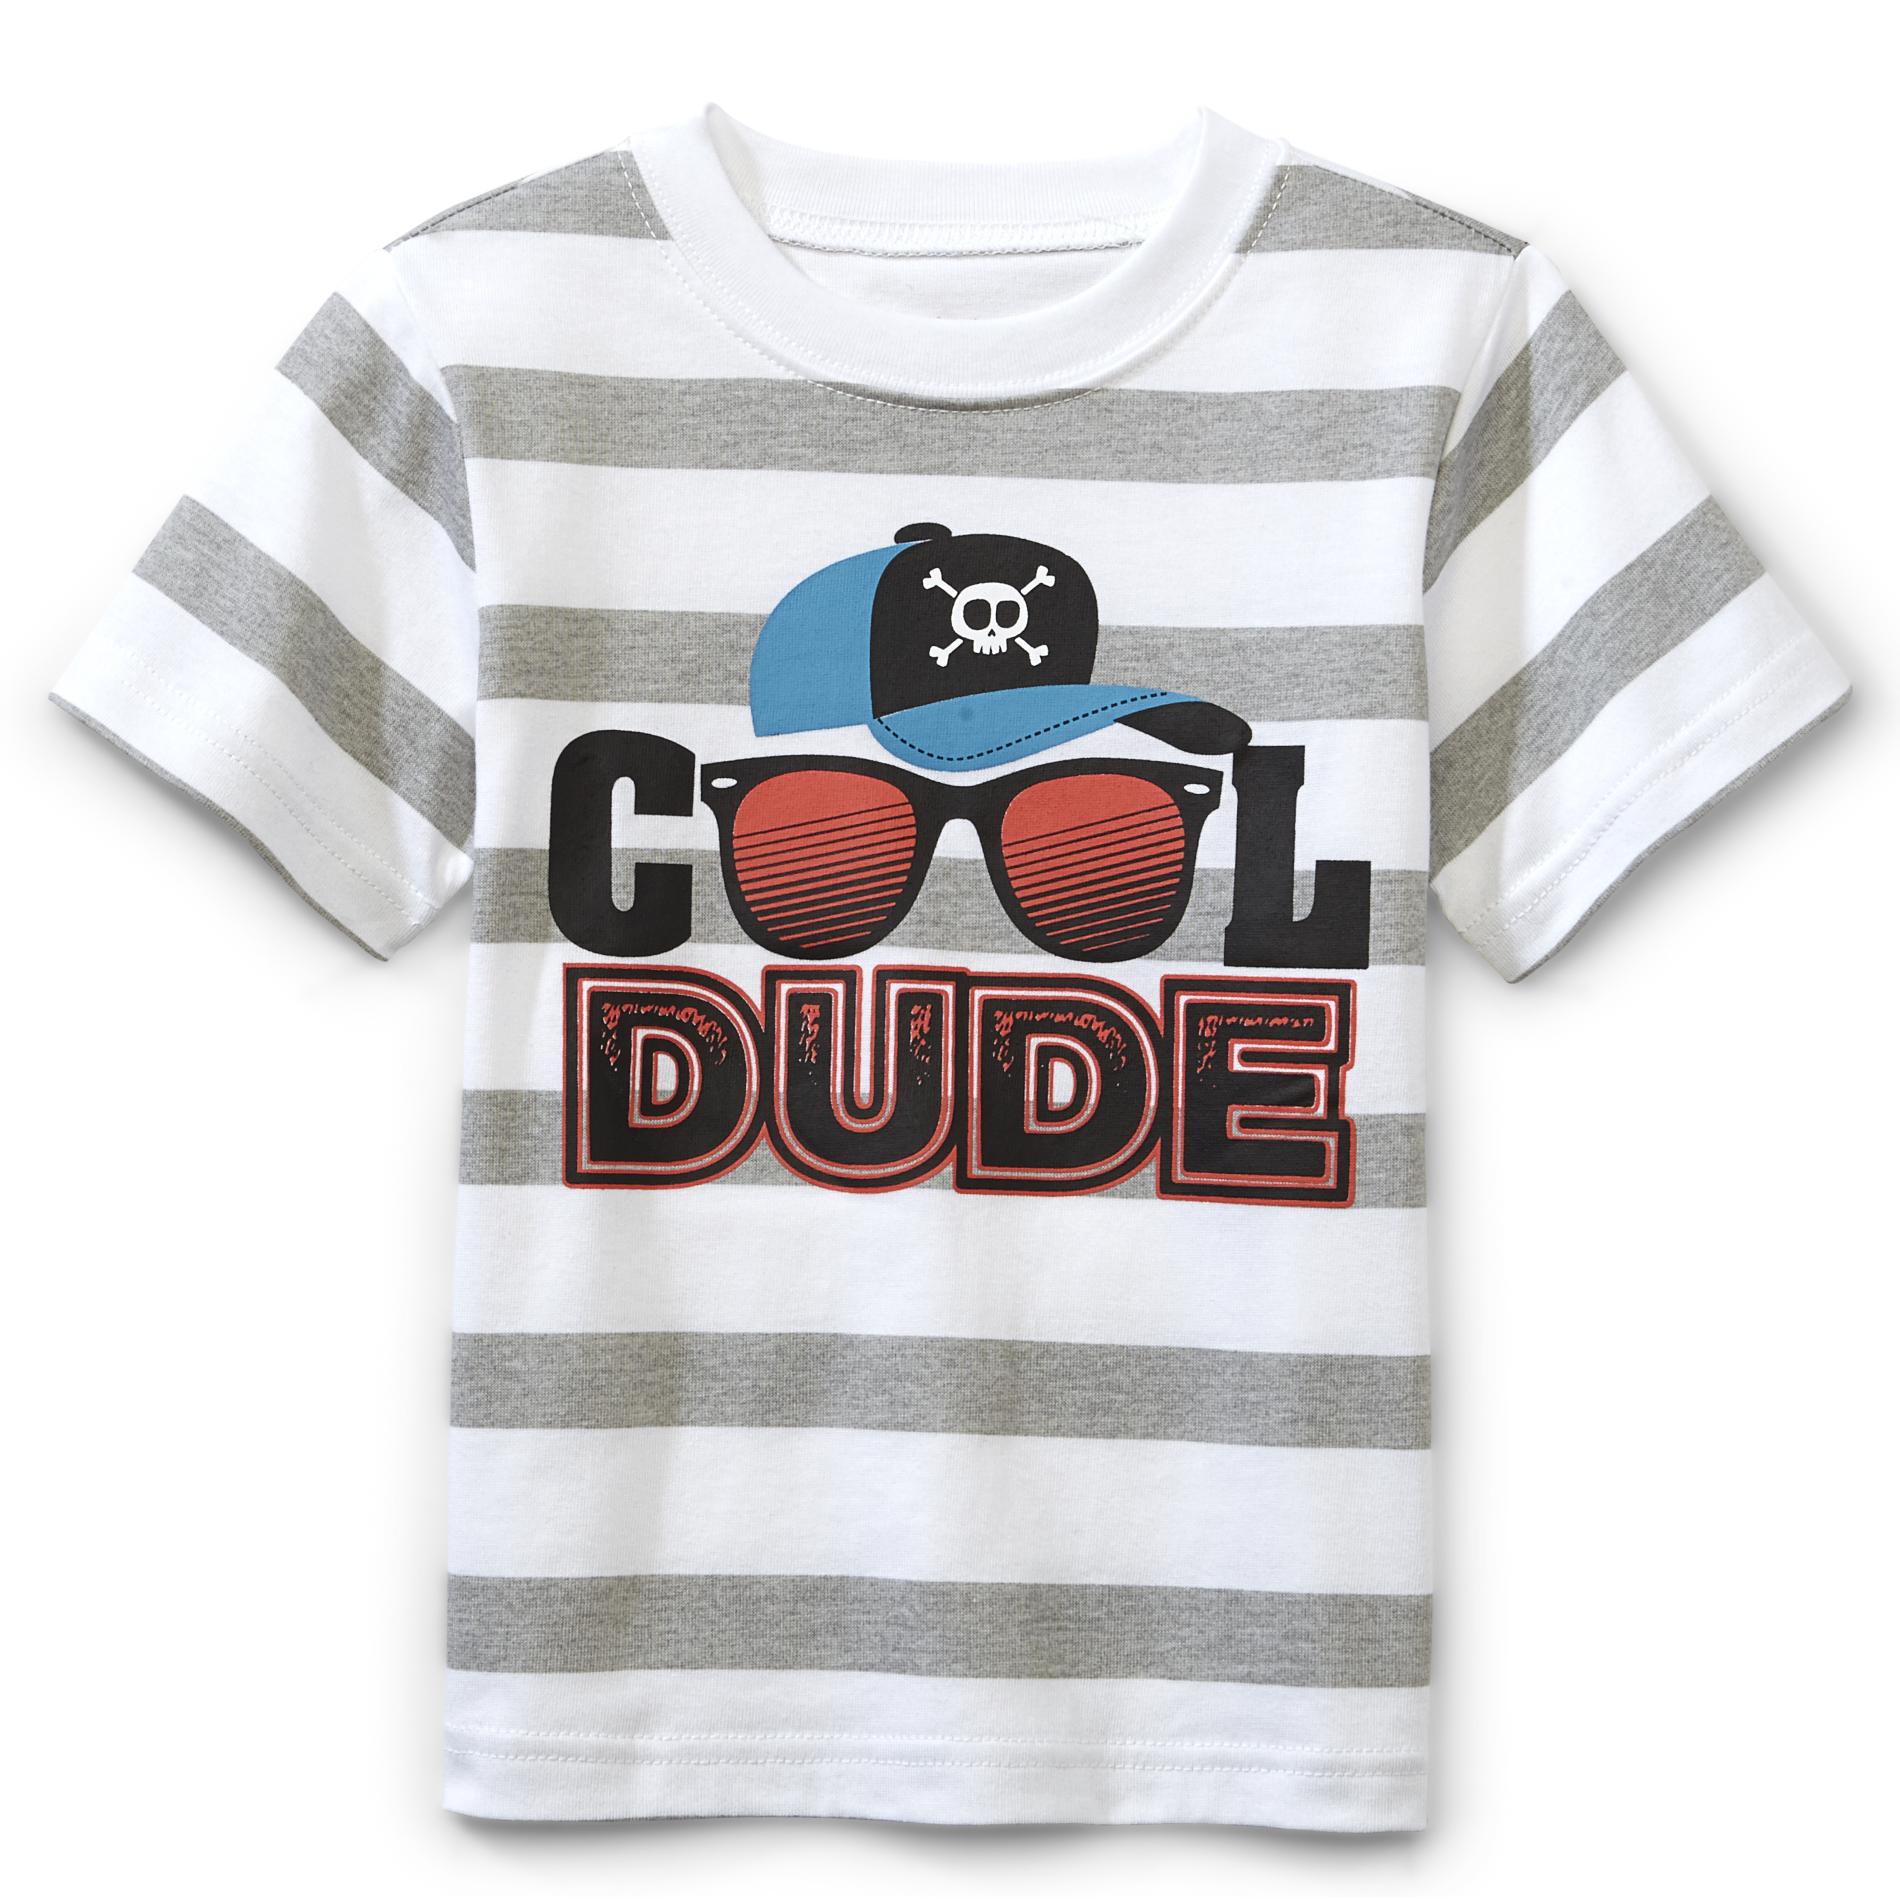 WonderKids Infant & Toddler Boy's Short-Sleeve Graphic T-Shirt - Cool Dude